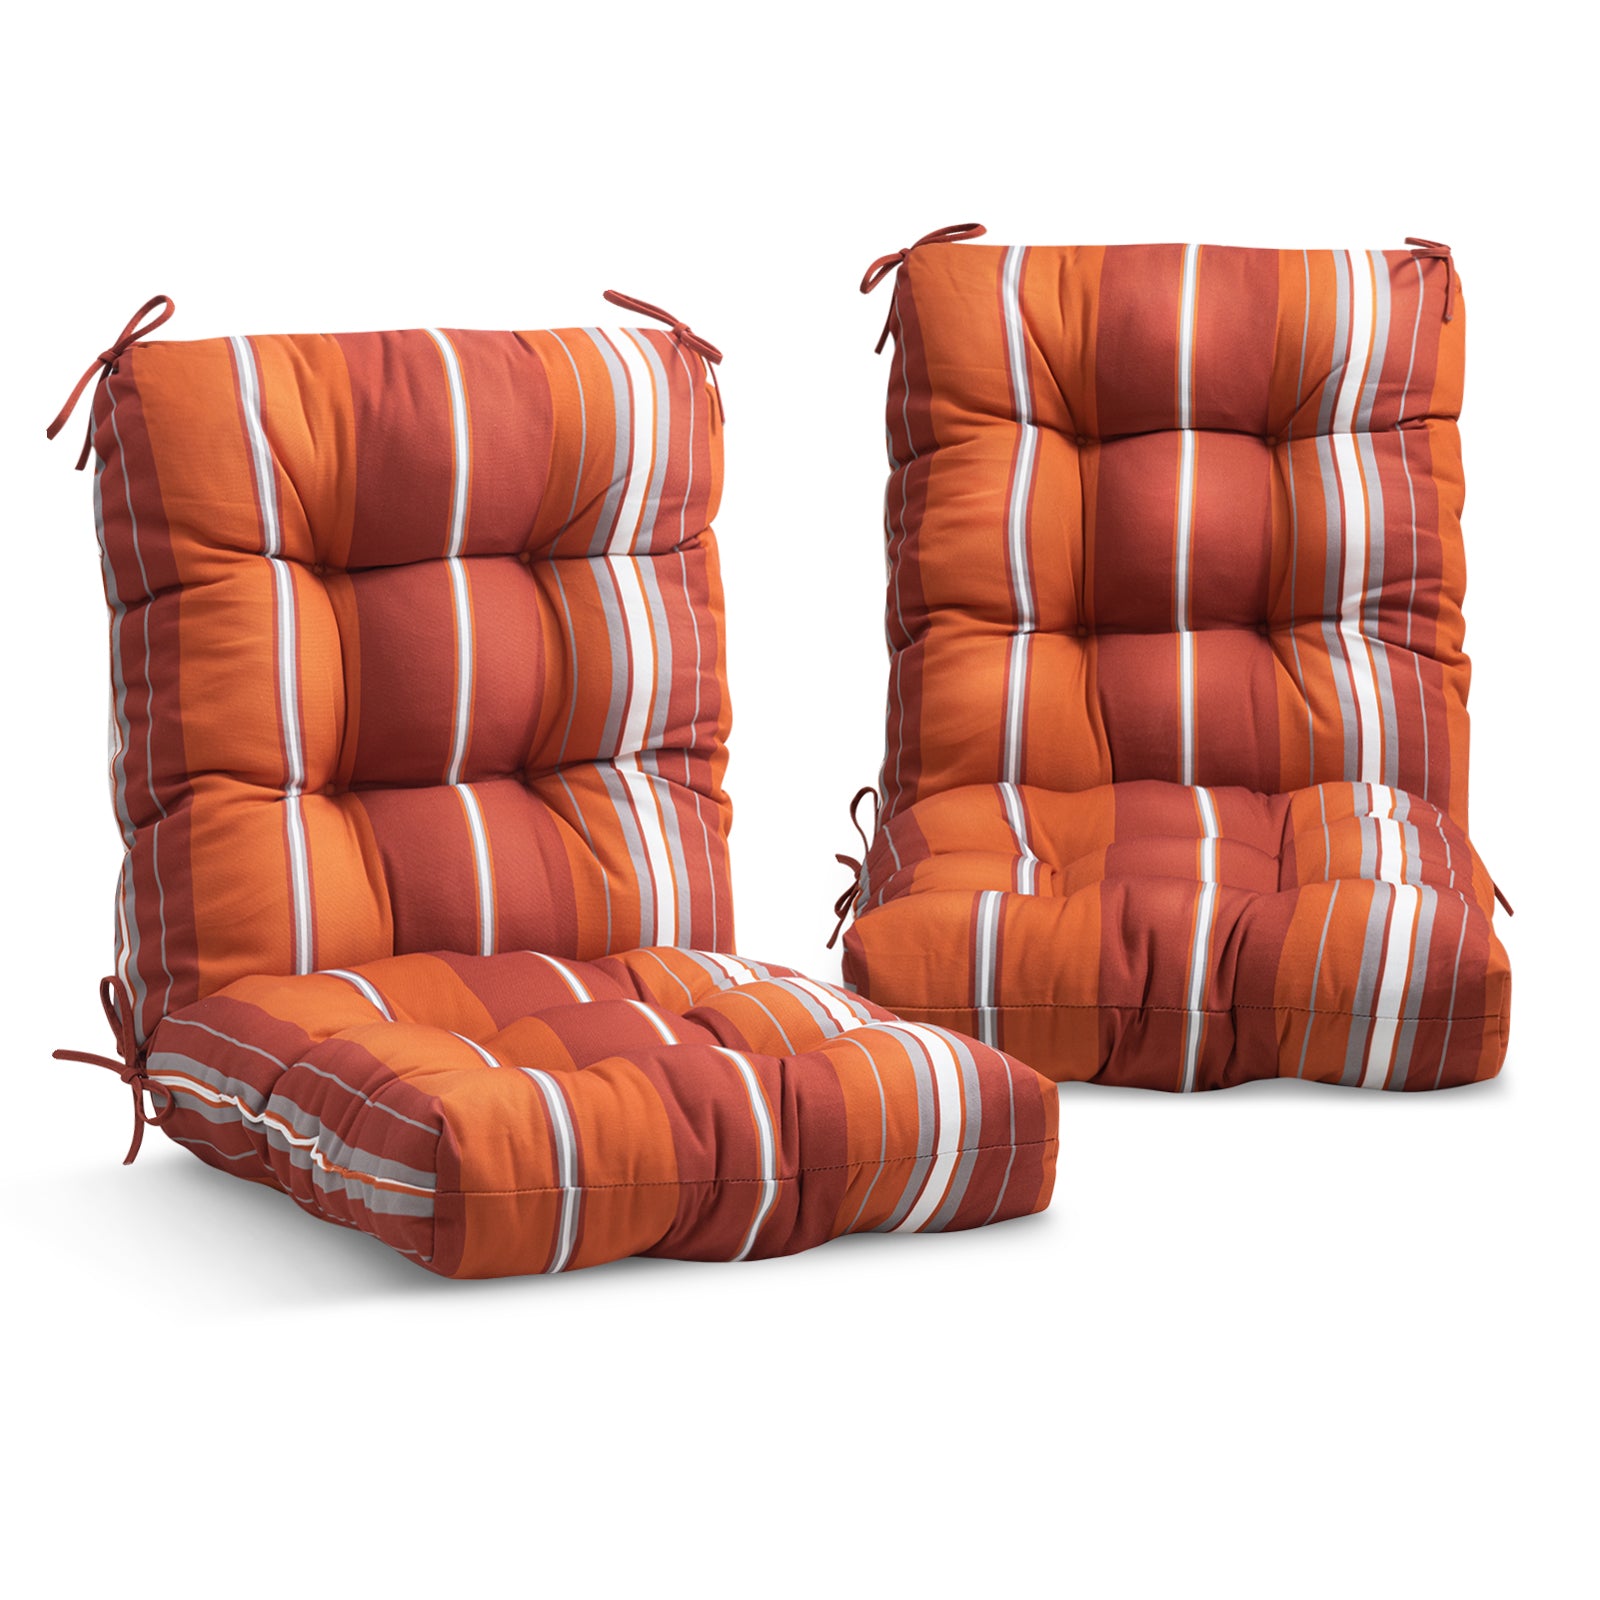 WanJing Outdoor SeatBack Chair Cushion,Thick Padded Turkey